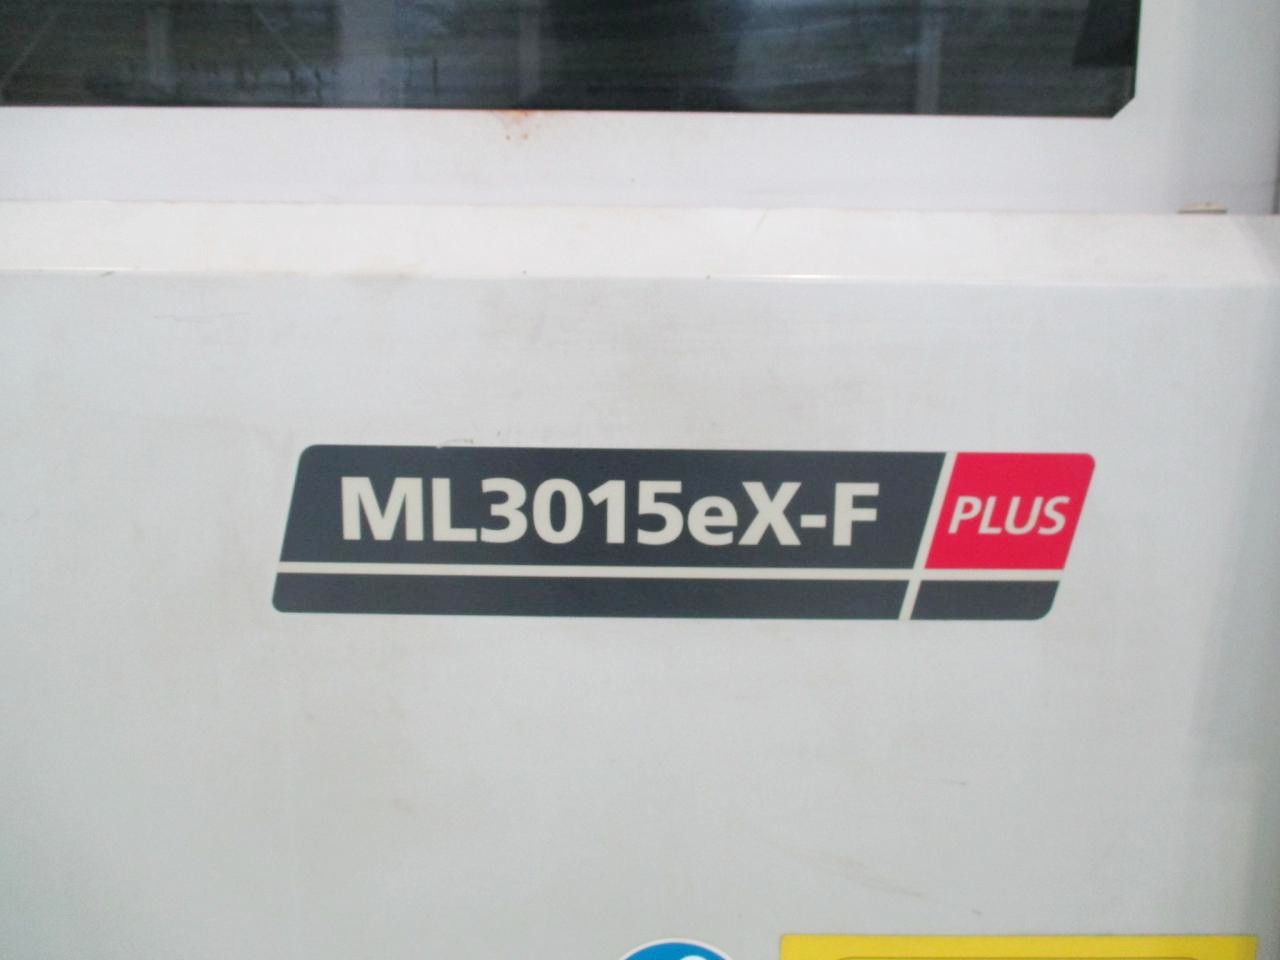 ML3015eX-Fロゴ表示